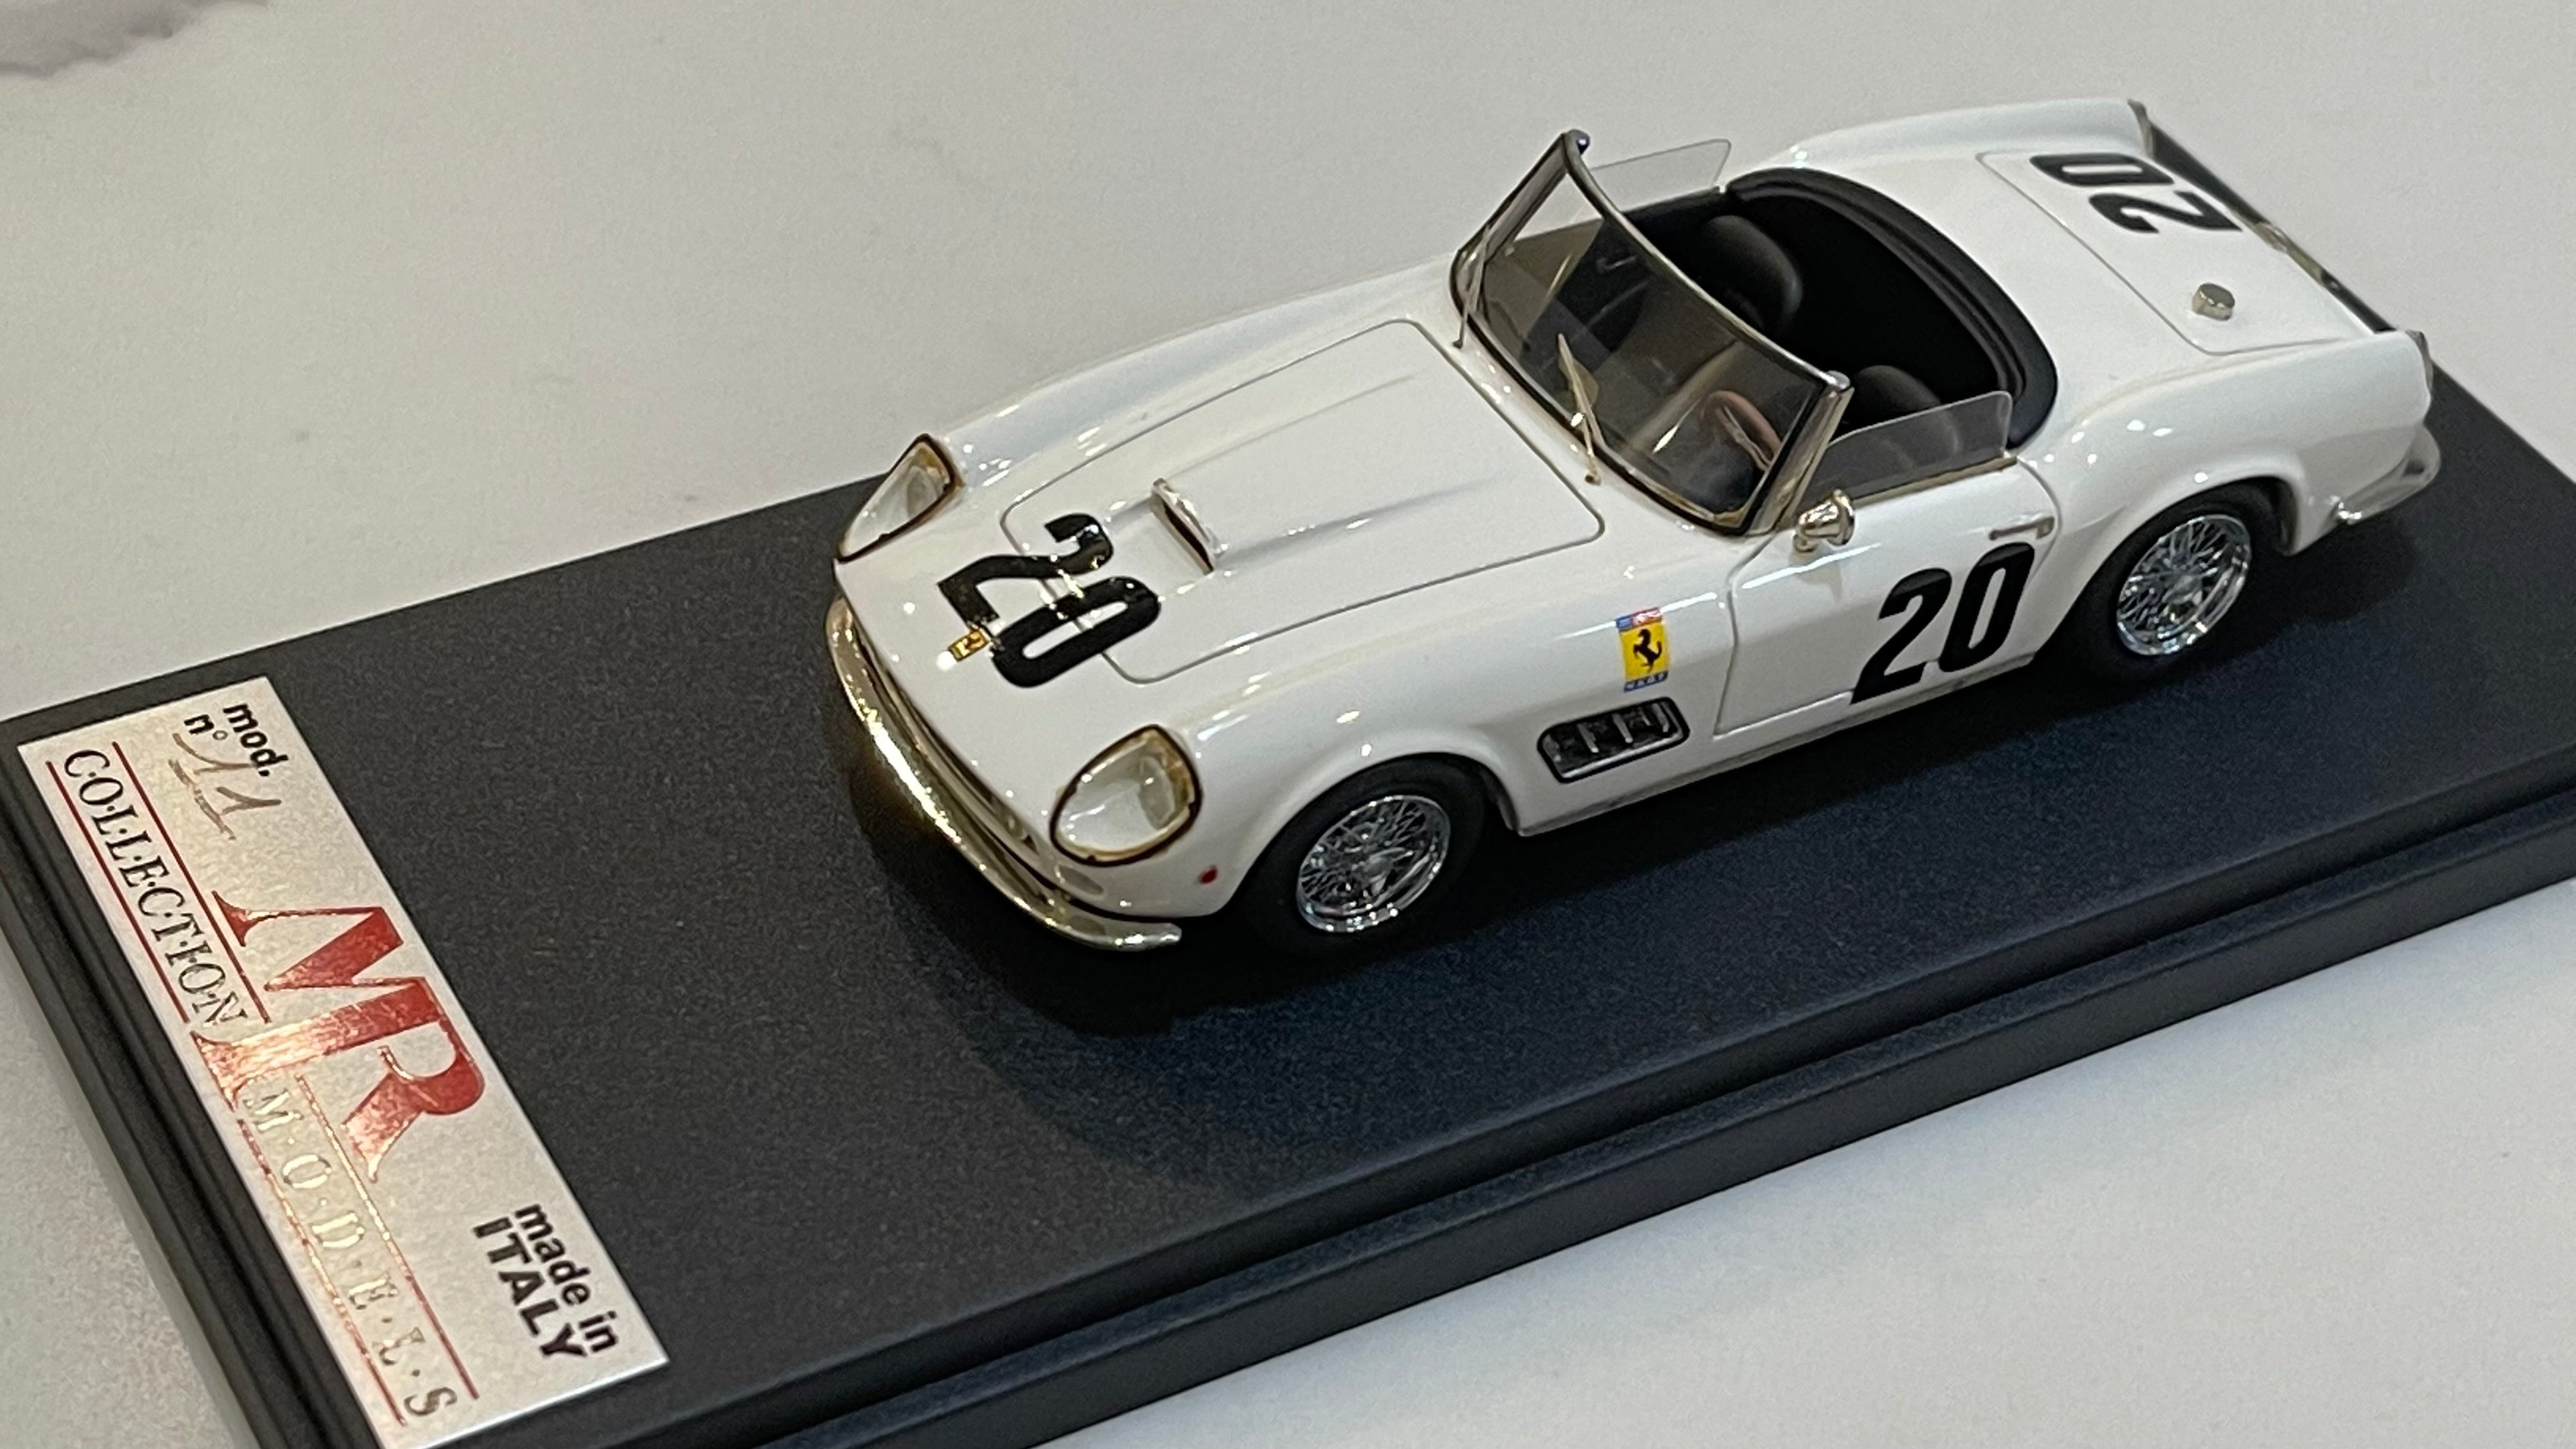 MR 1/43 Ferrari 250 GT California Spyder 24 Hours Le Mans 1960 White No. 20 MR100